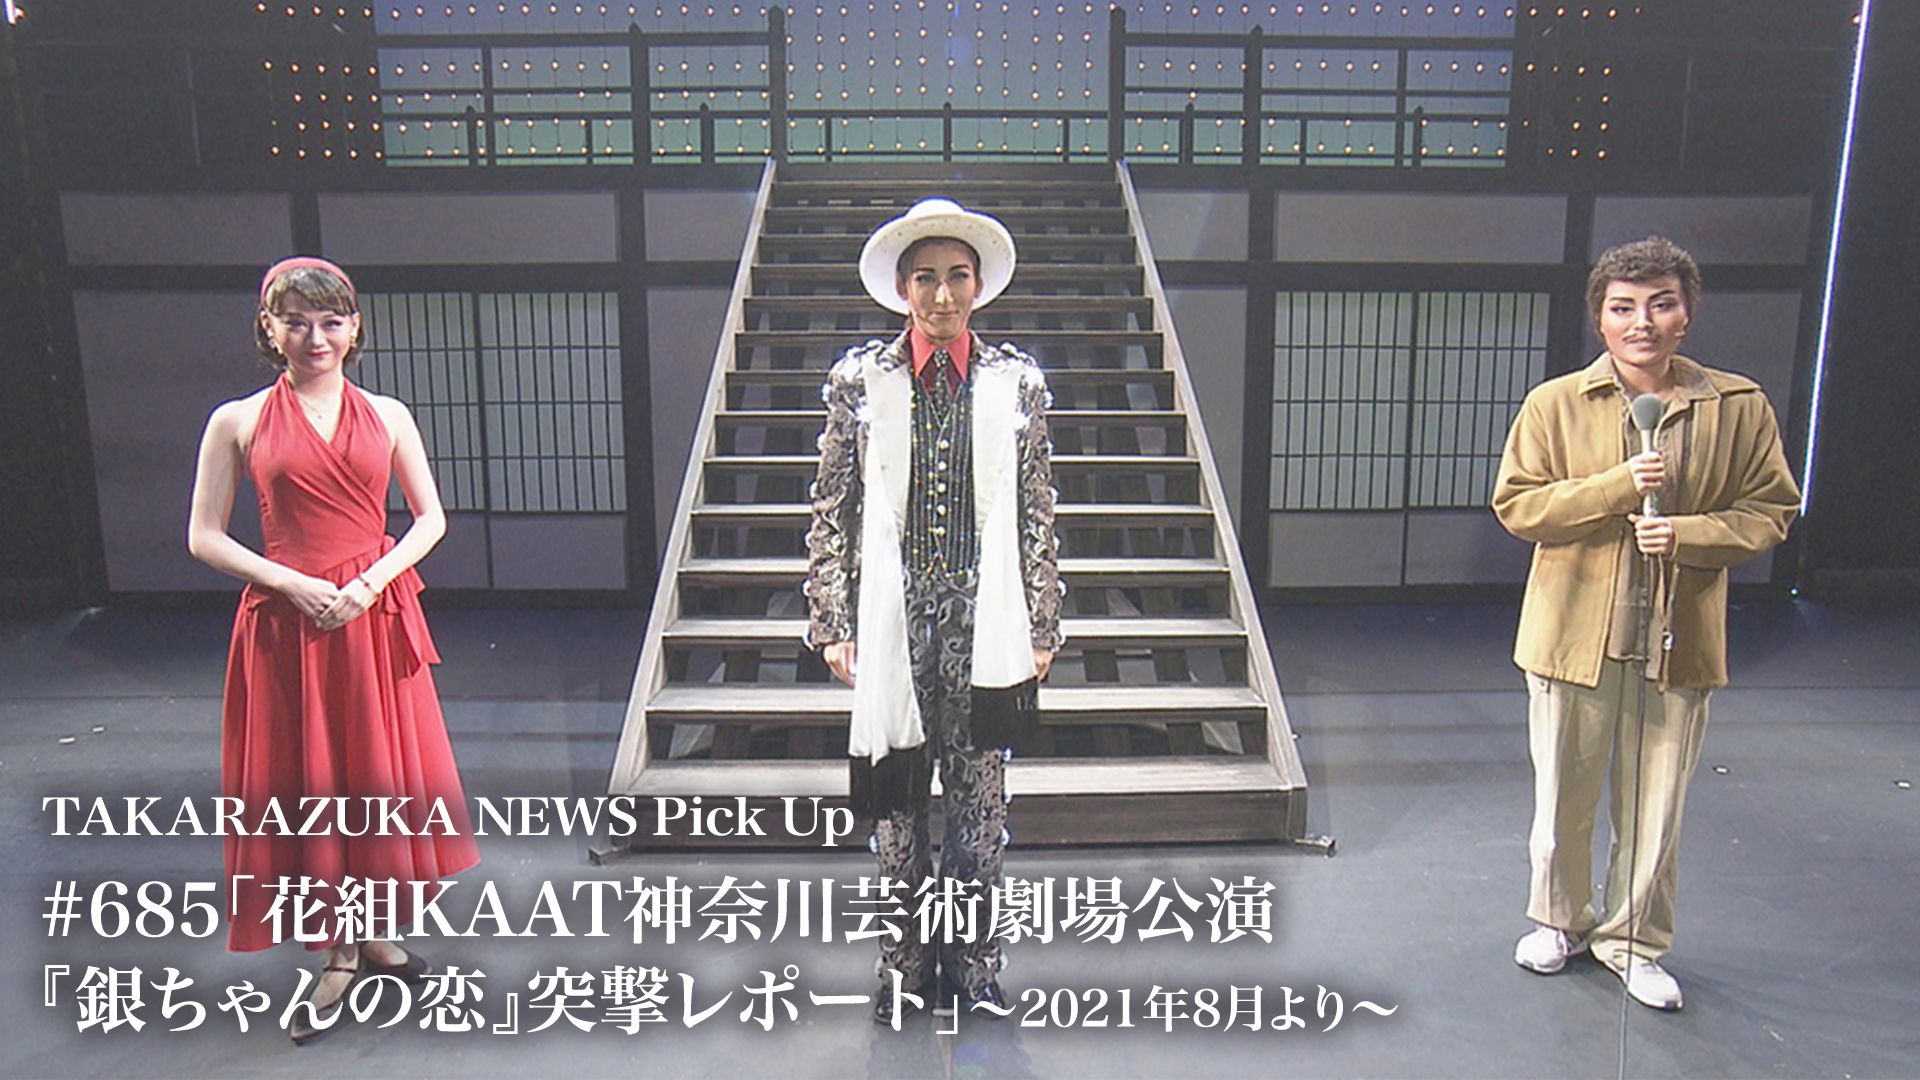 TAKARAZUKA NEWS Pick Up #685「花組KAAT神奈川芸術劇場公演『銀ちゃんの恋』突撃レポート」